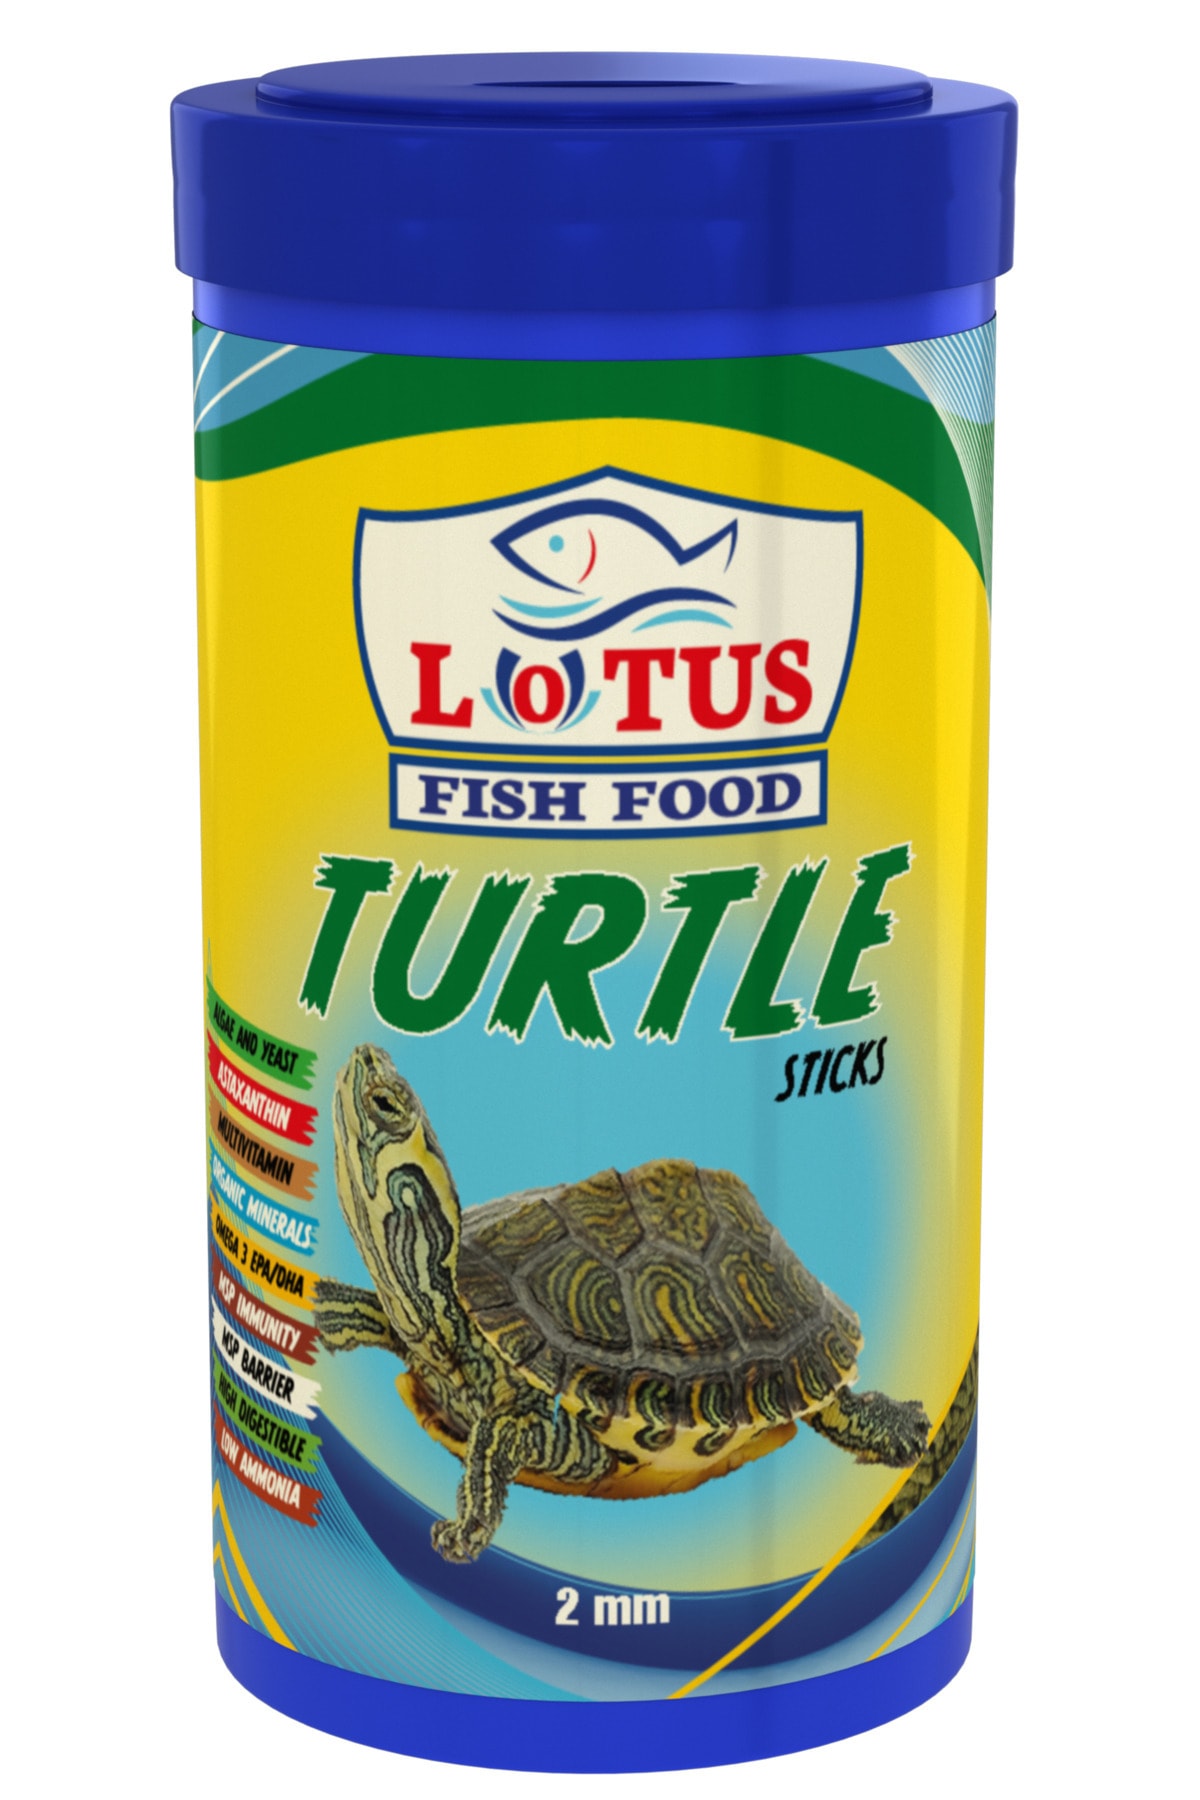 Amore Turtle Green Sticks 125 + 250 + 100 ml Bonisa, Lotus Su Kaplumbagasi Yemi ve Vitamin Seti